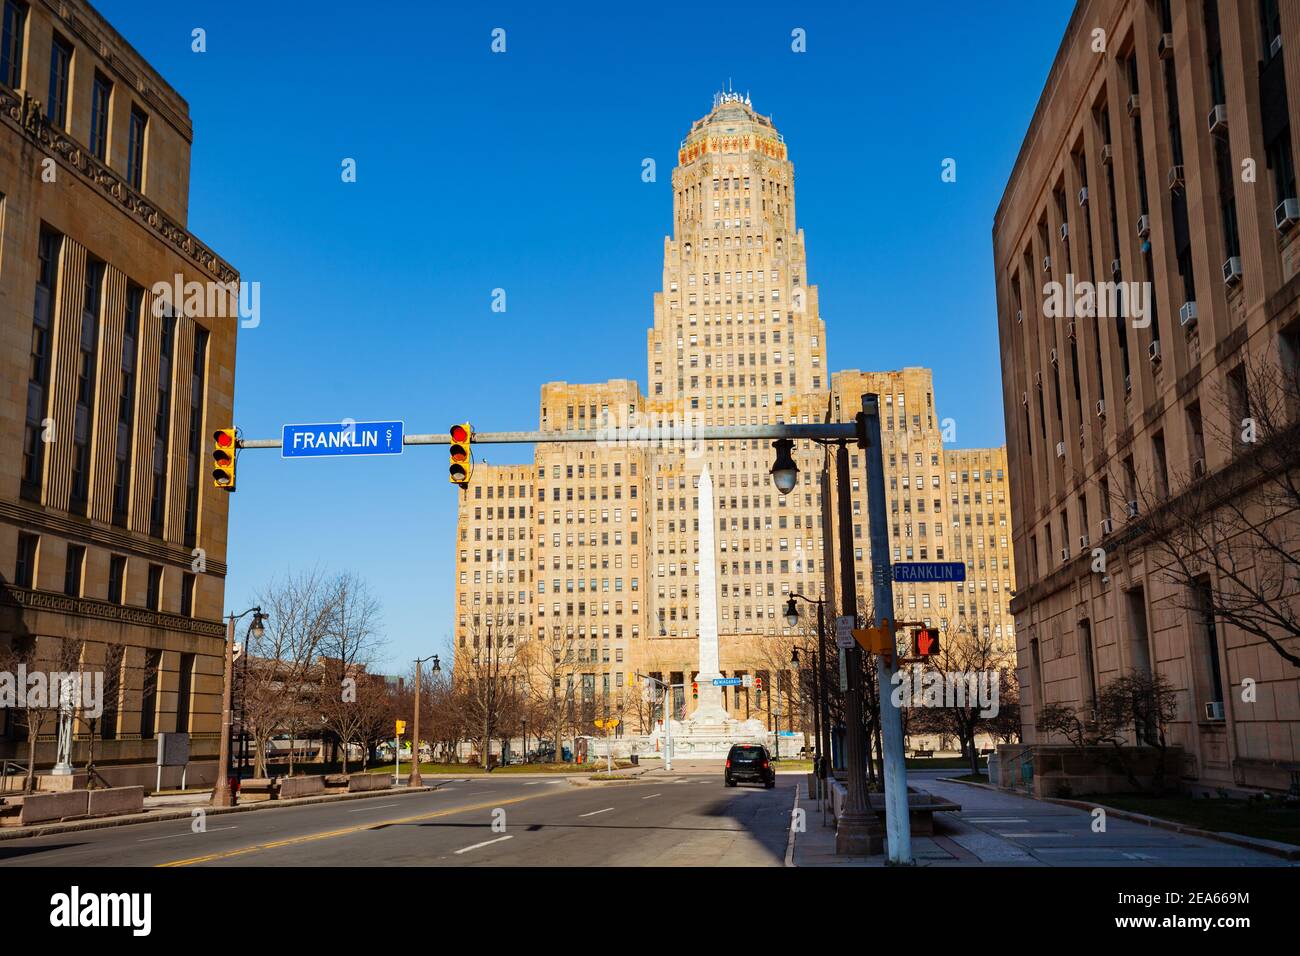 Buffalo City Hall on Niagara Square and Franklin street, New York state, USA Stock Photo